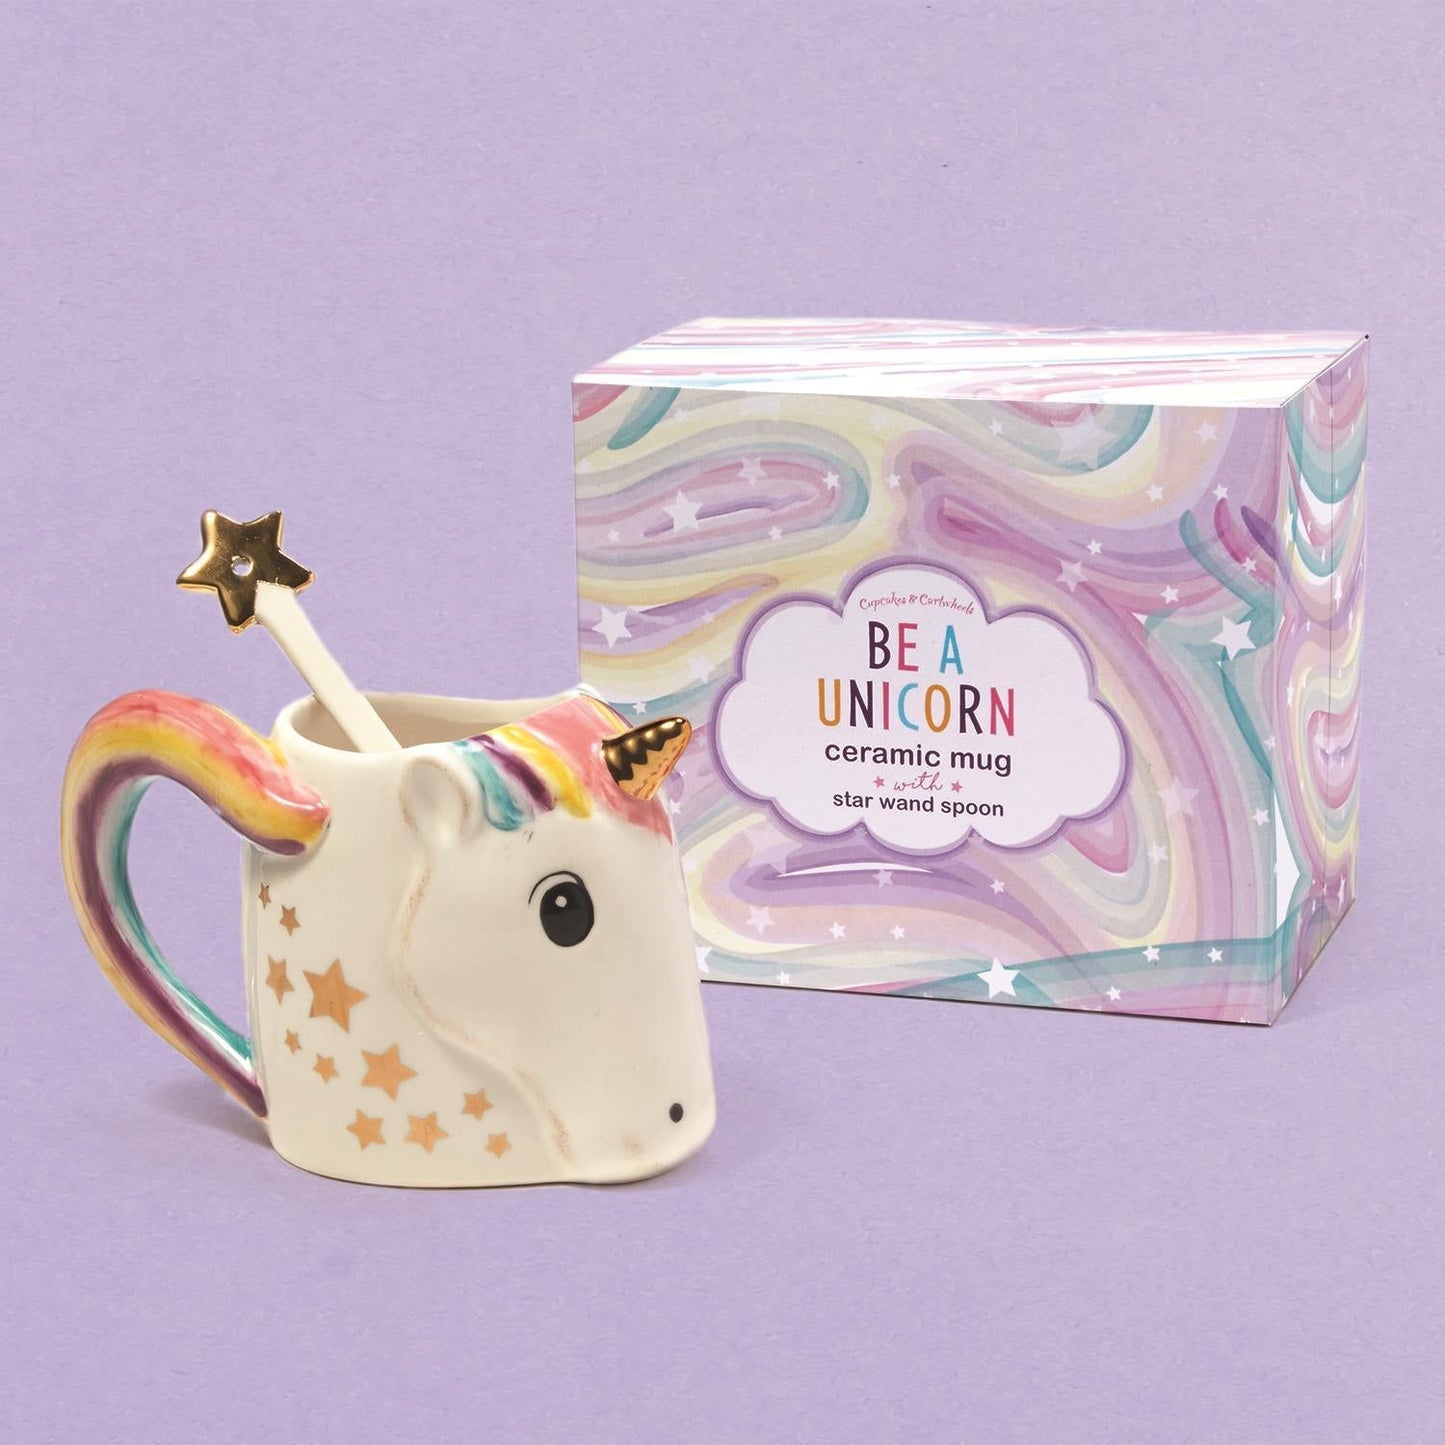 Be A Unicorn Ceramic Mug with Metallic Star Stirrer in Gift Box